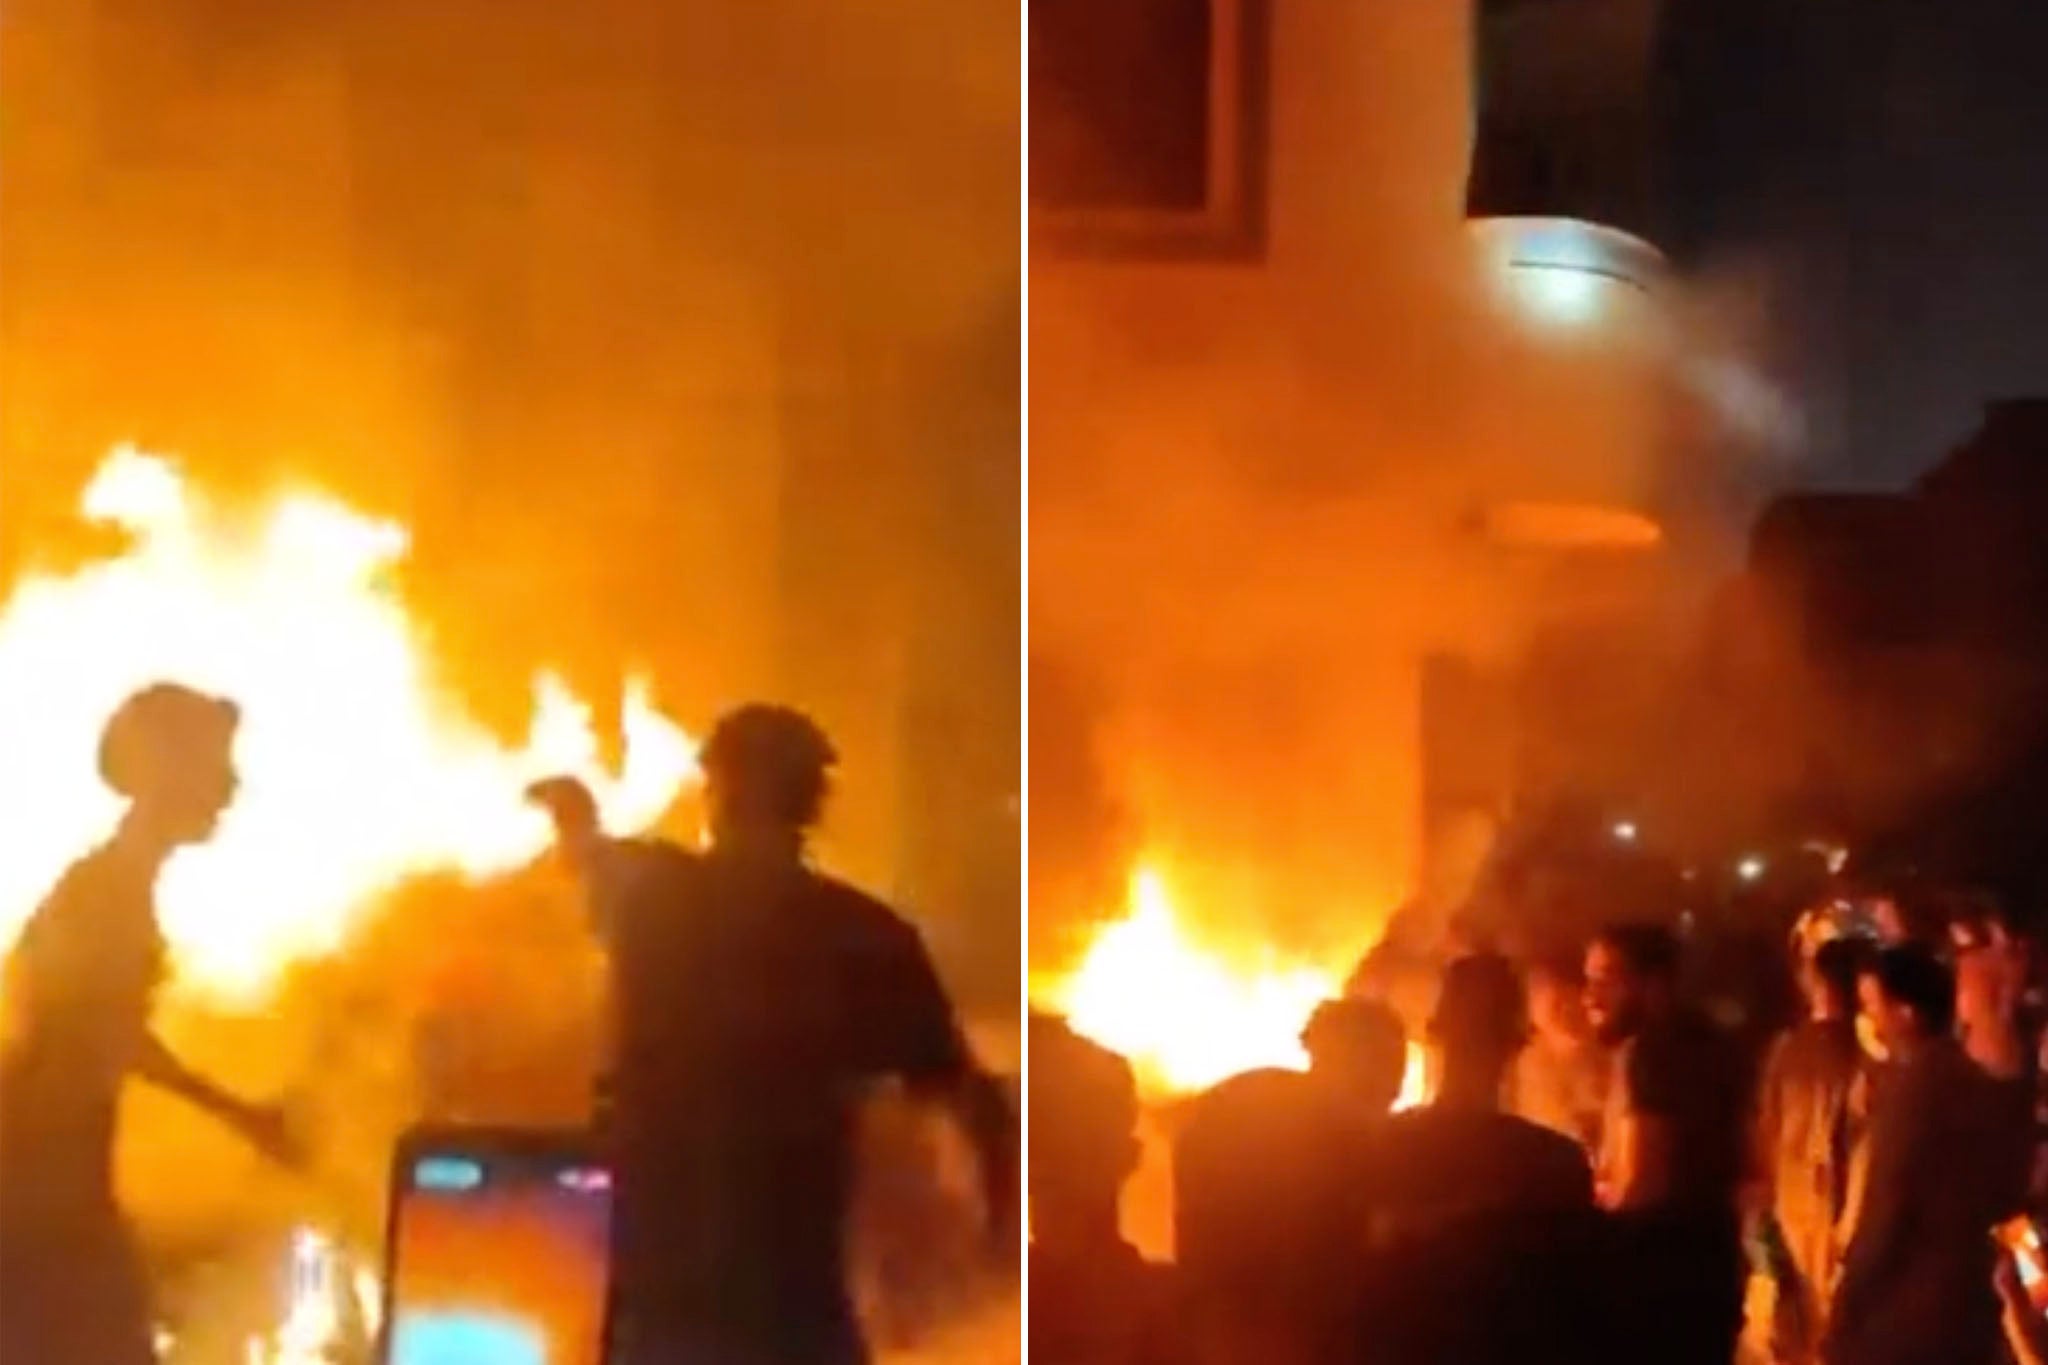 Protesters set fire to the house of Derna’s mayor, Abdulmenam al-Ghaithi, on Monday evening